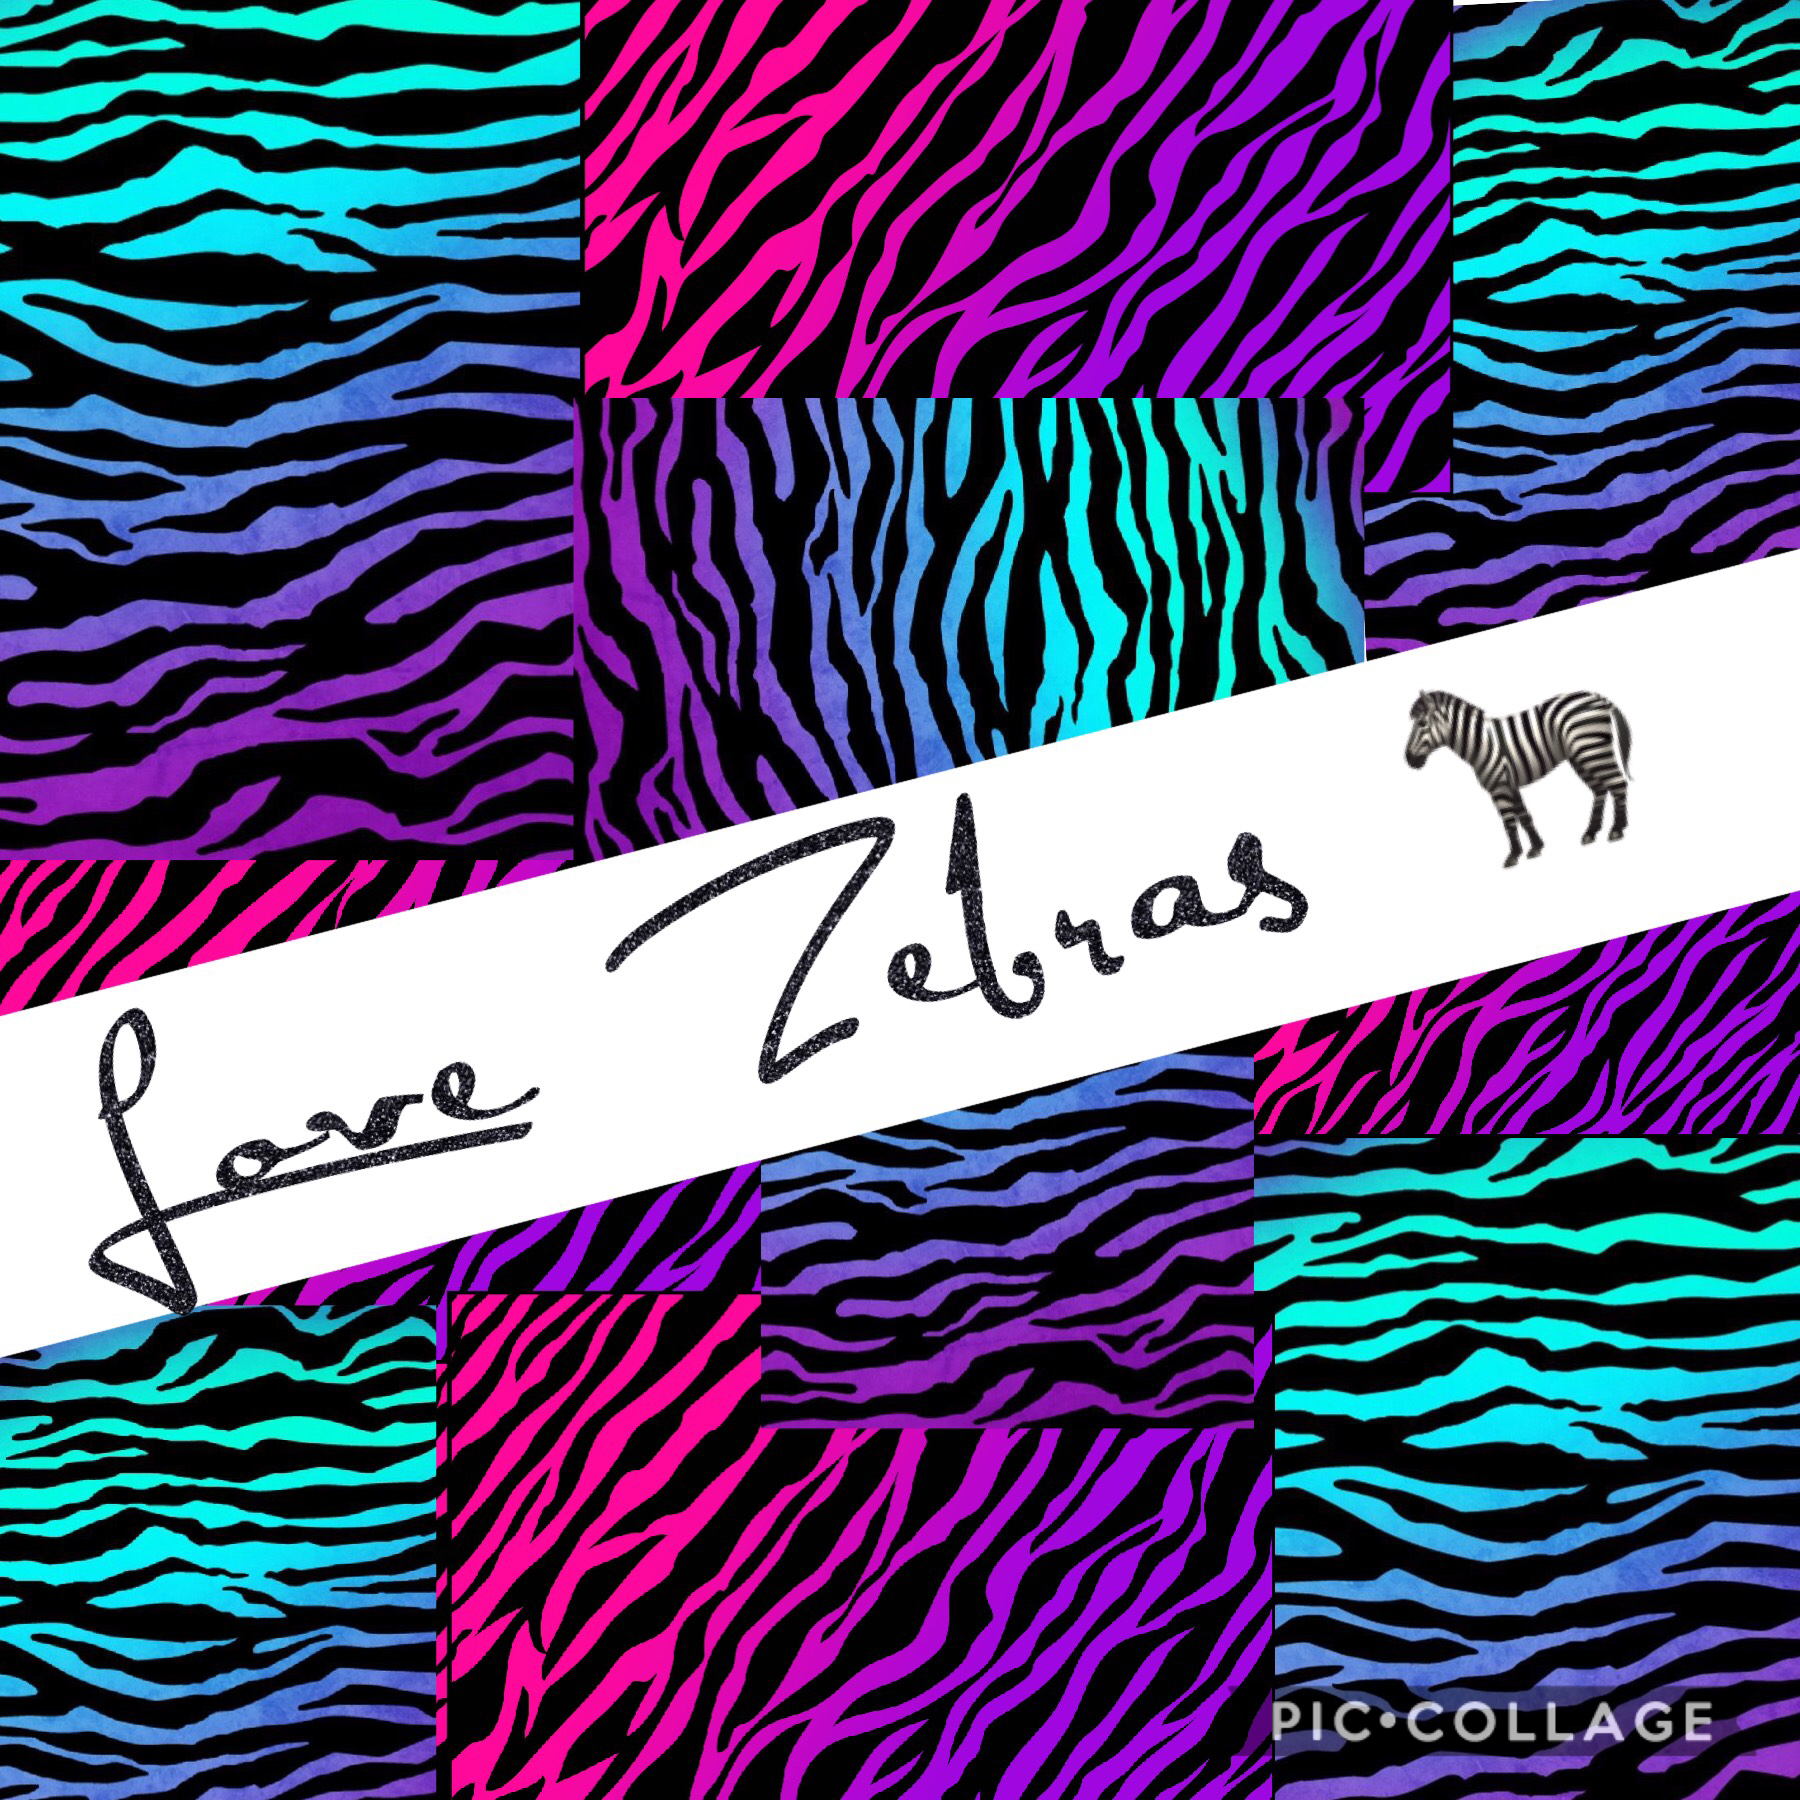 Inspired by Zebras 🦓 